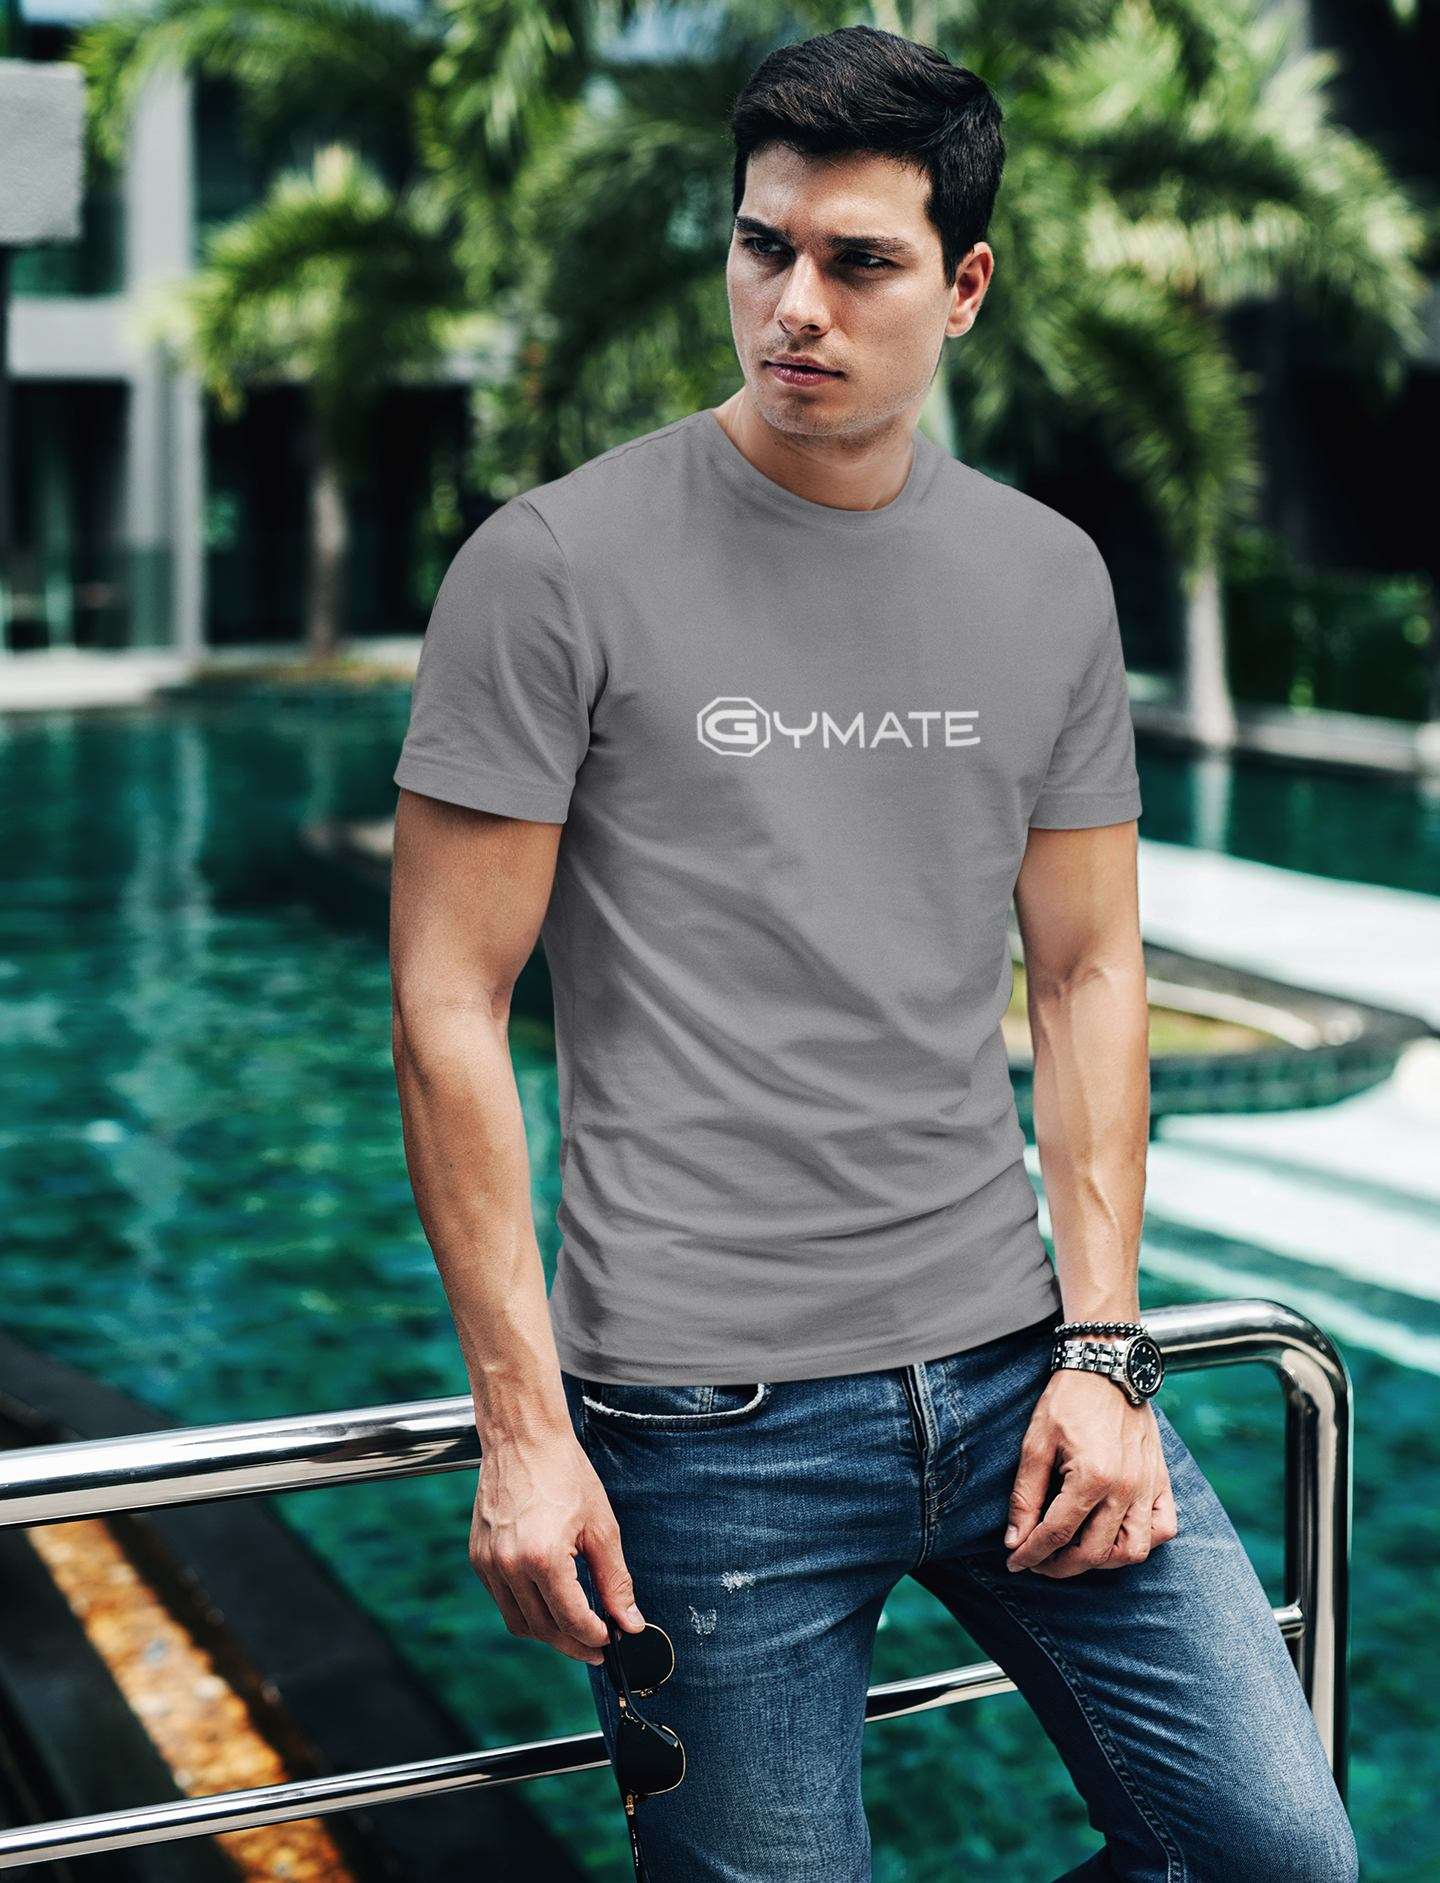 Designer mens T shirts Gymate grey